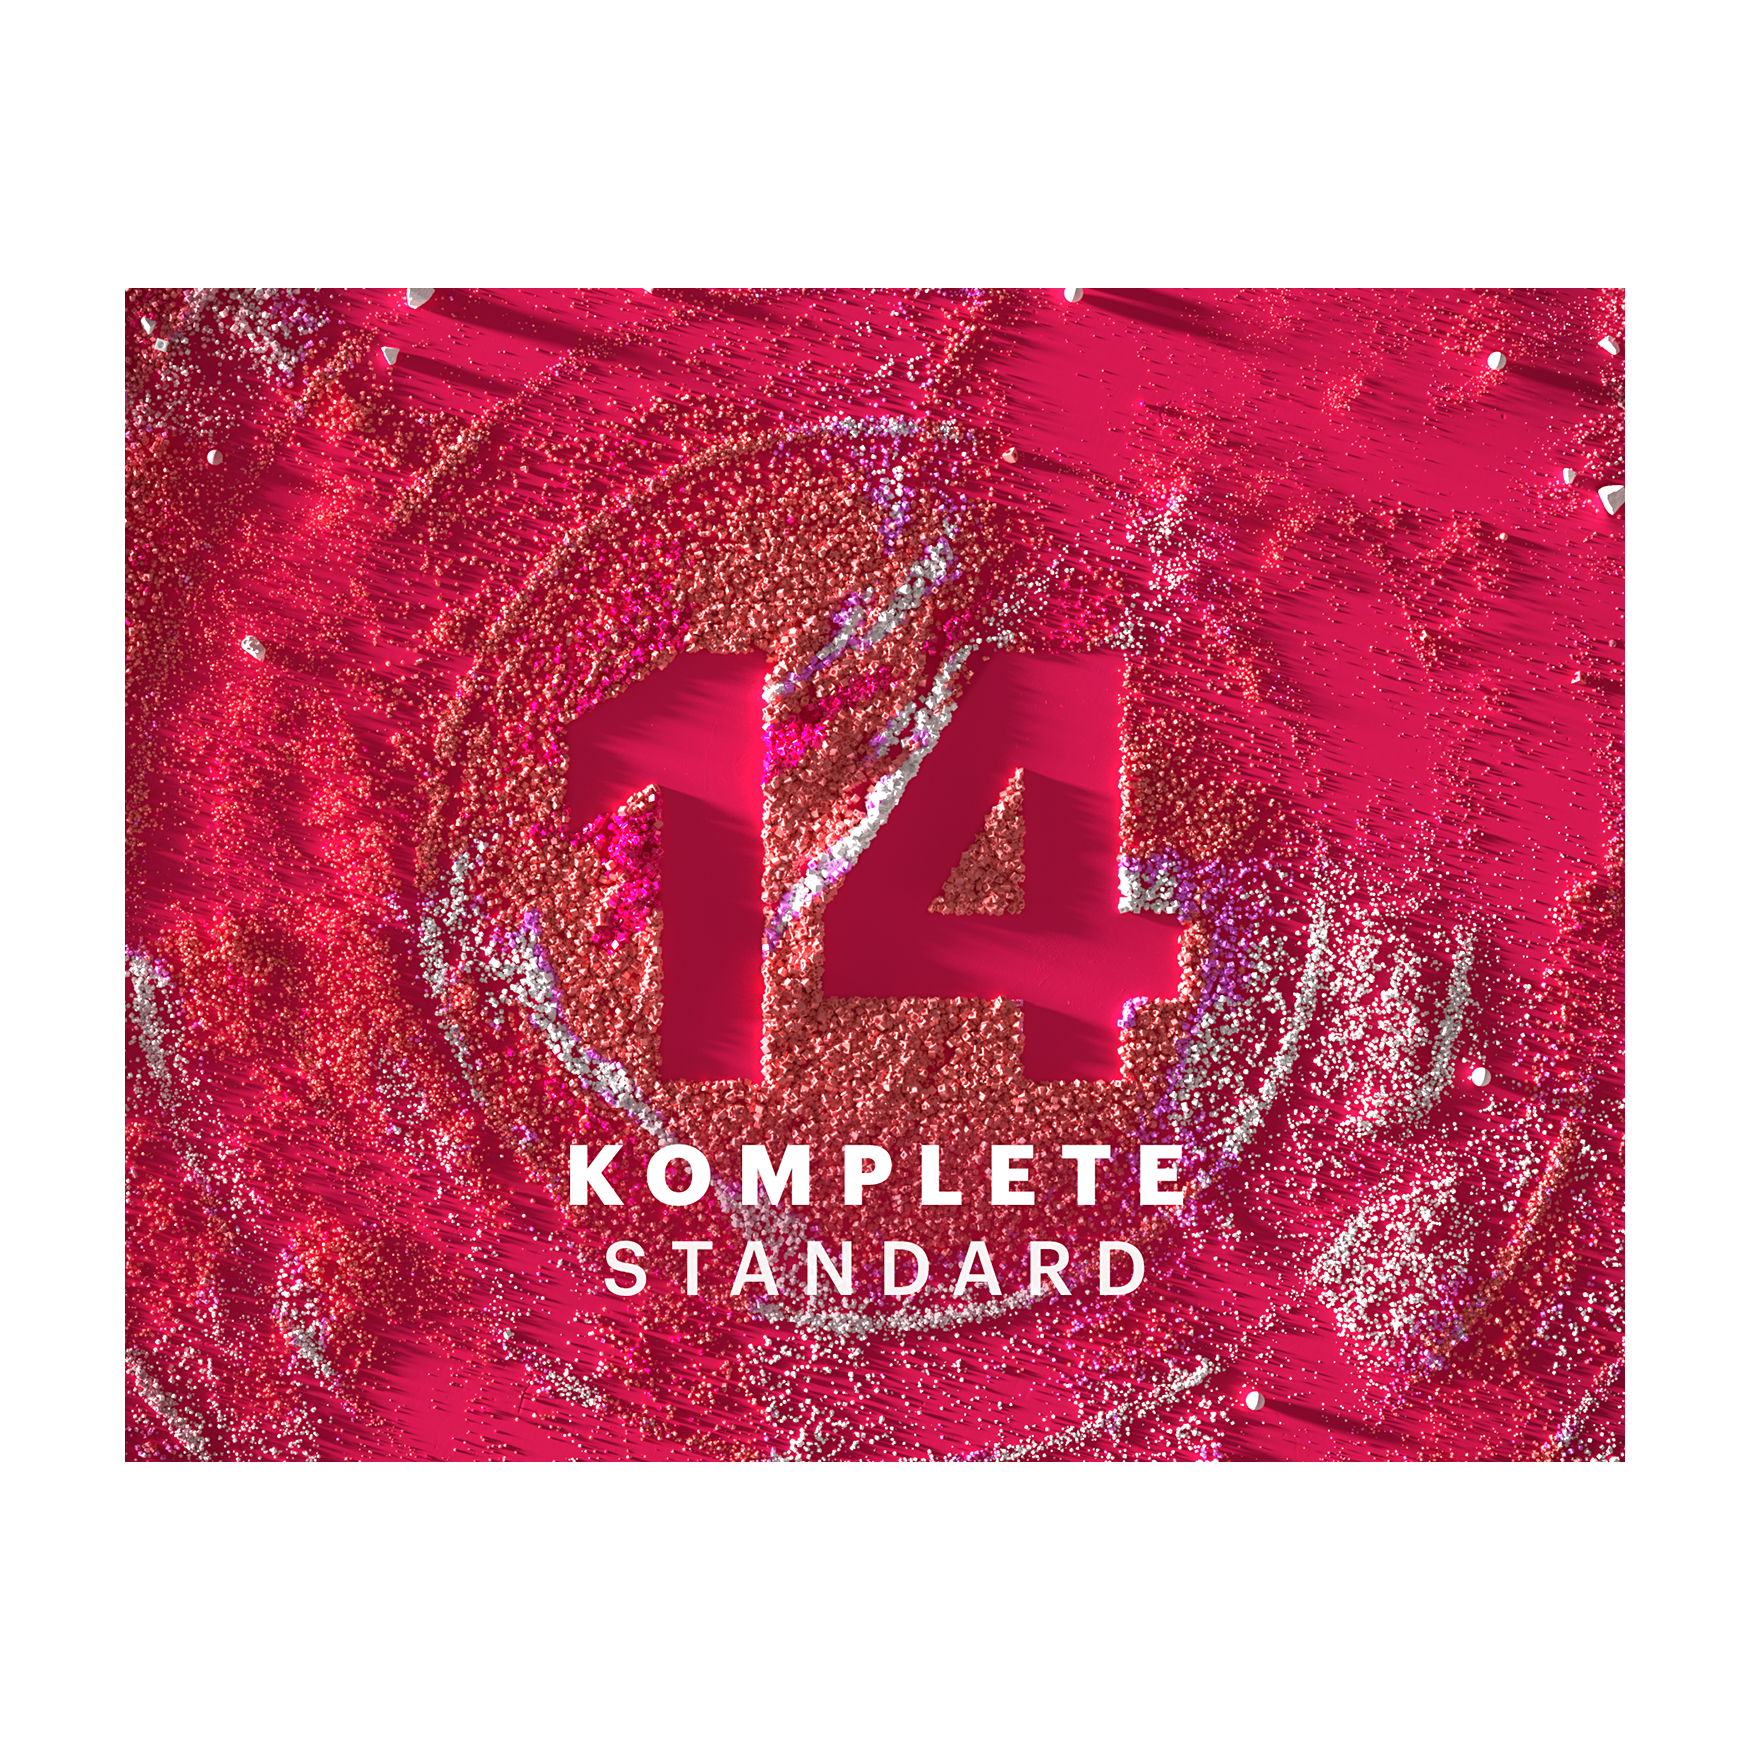 Komplete-14-Standard-artwork-logo